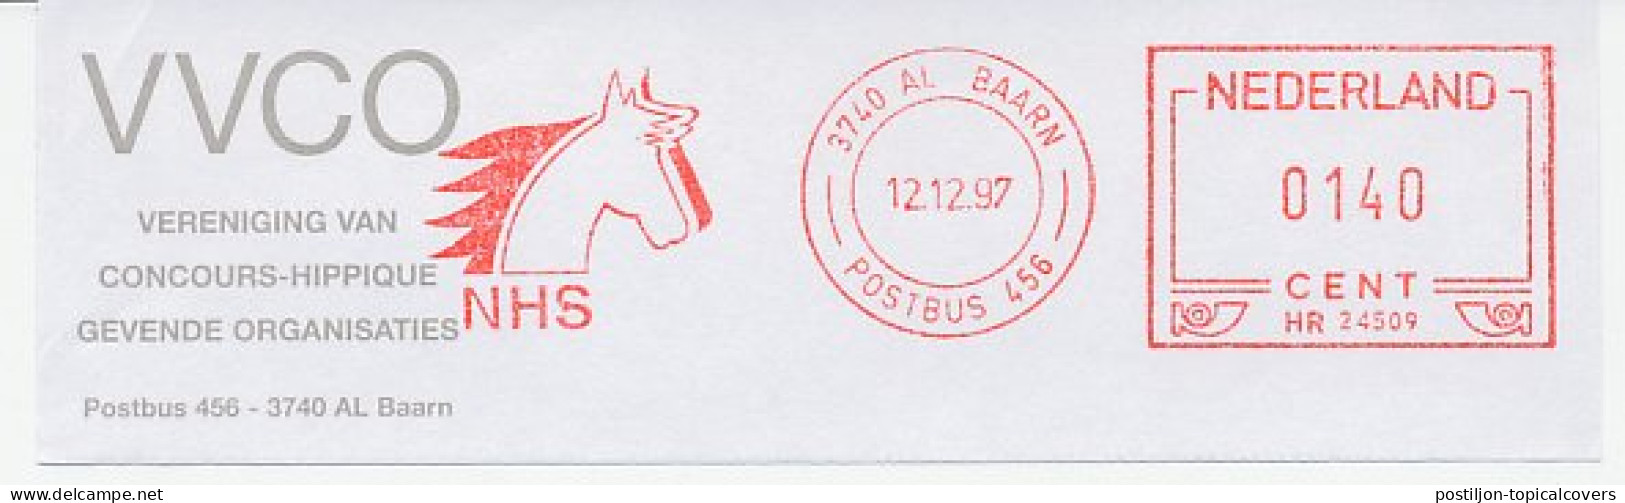 Meter Top Cut Netherlands 1997 Association Concours Hippique - Horse Show - Ippica